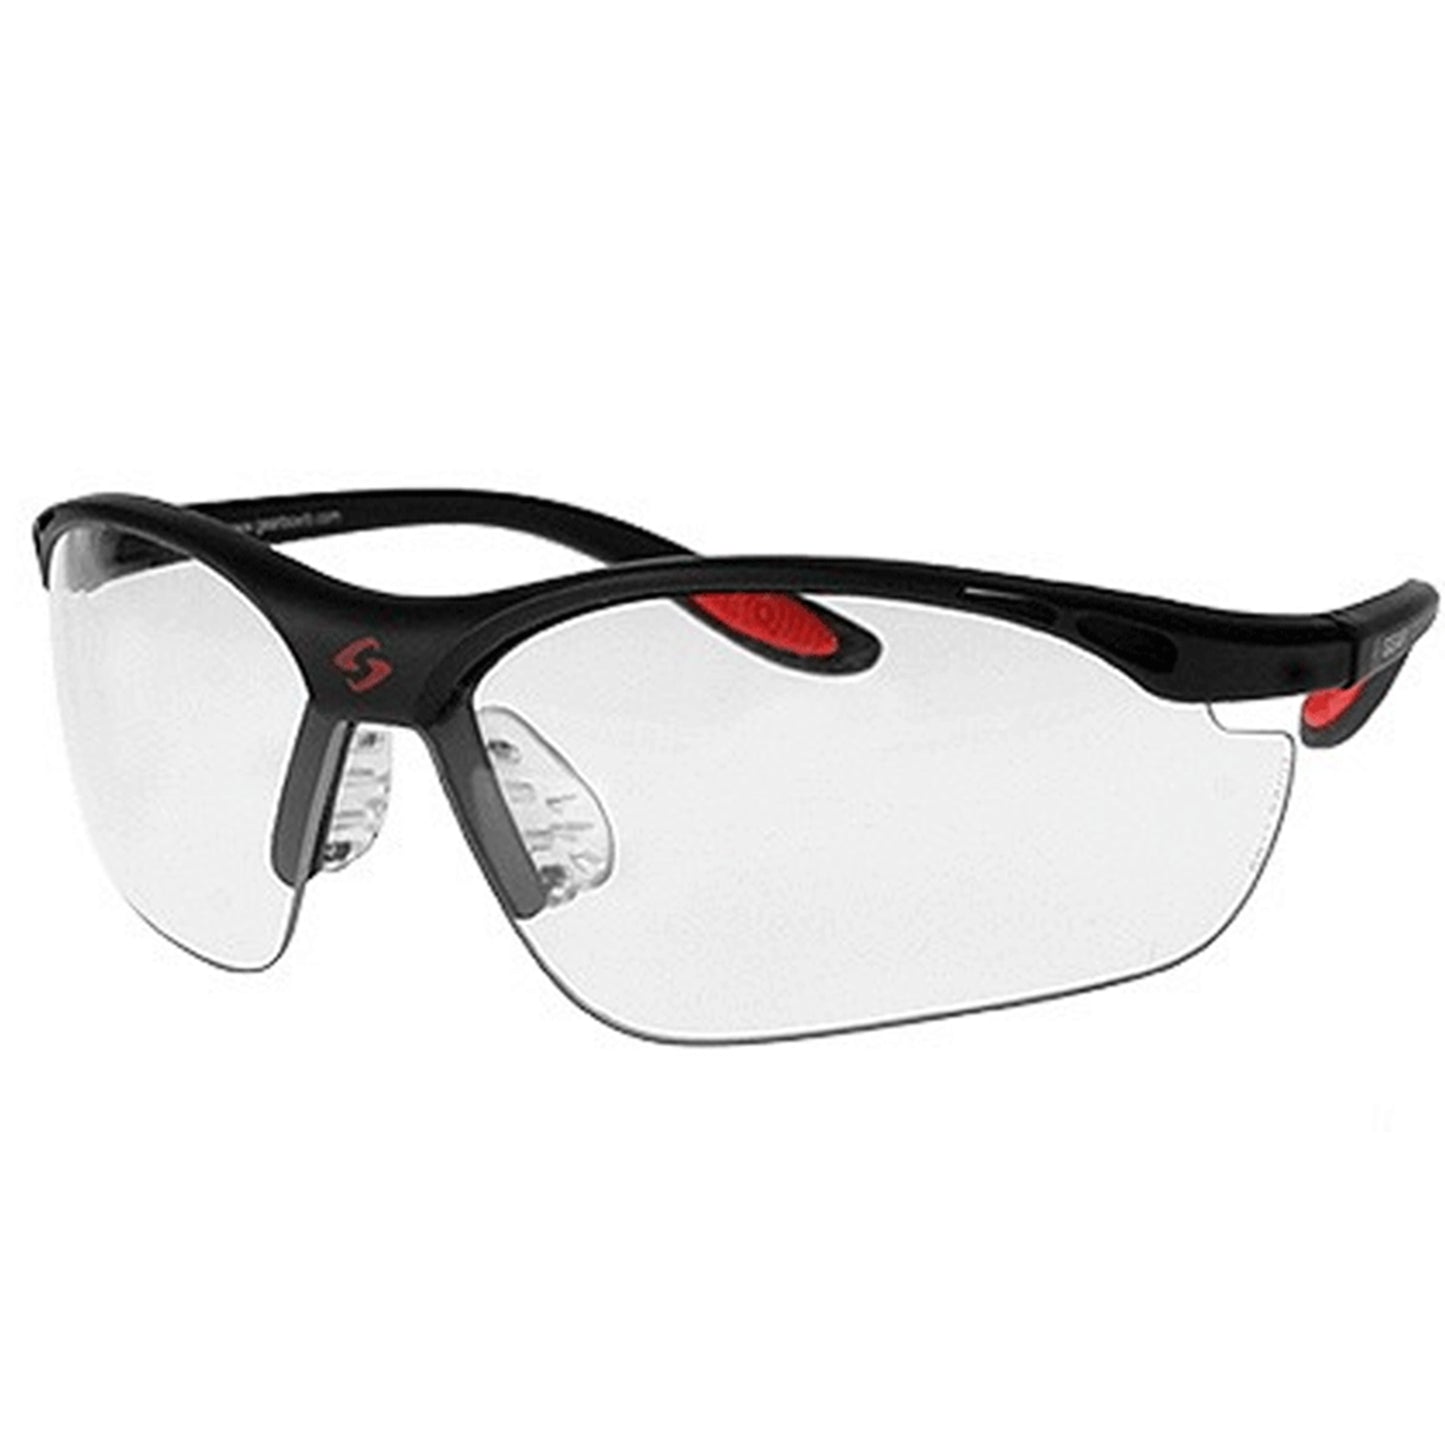 Gearbox Vision Eyewear - Black Frame